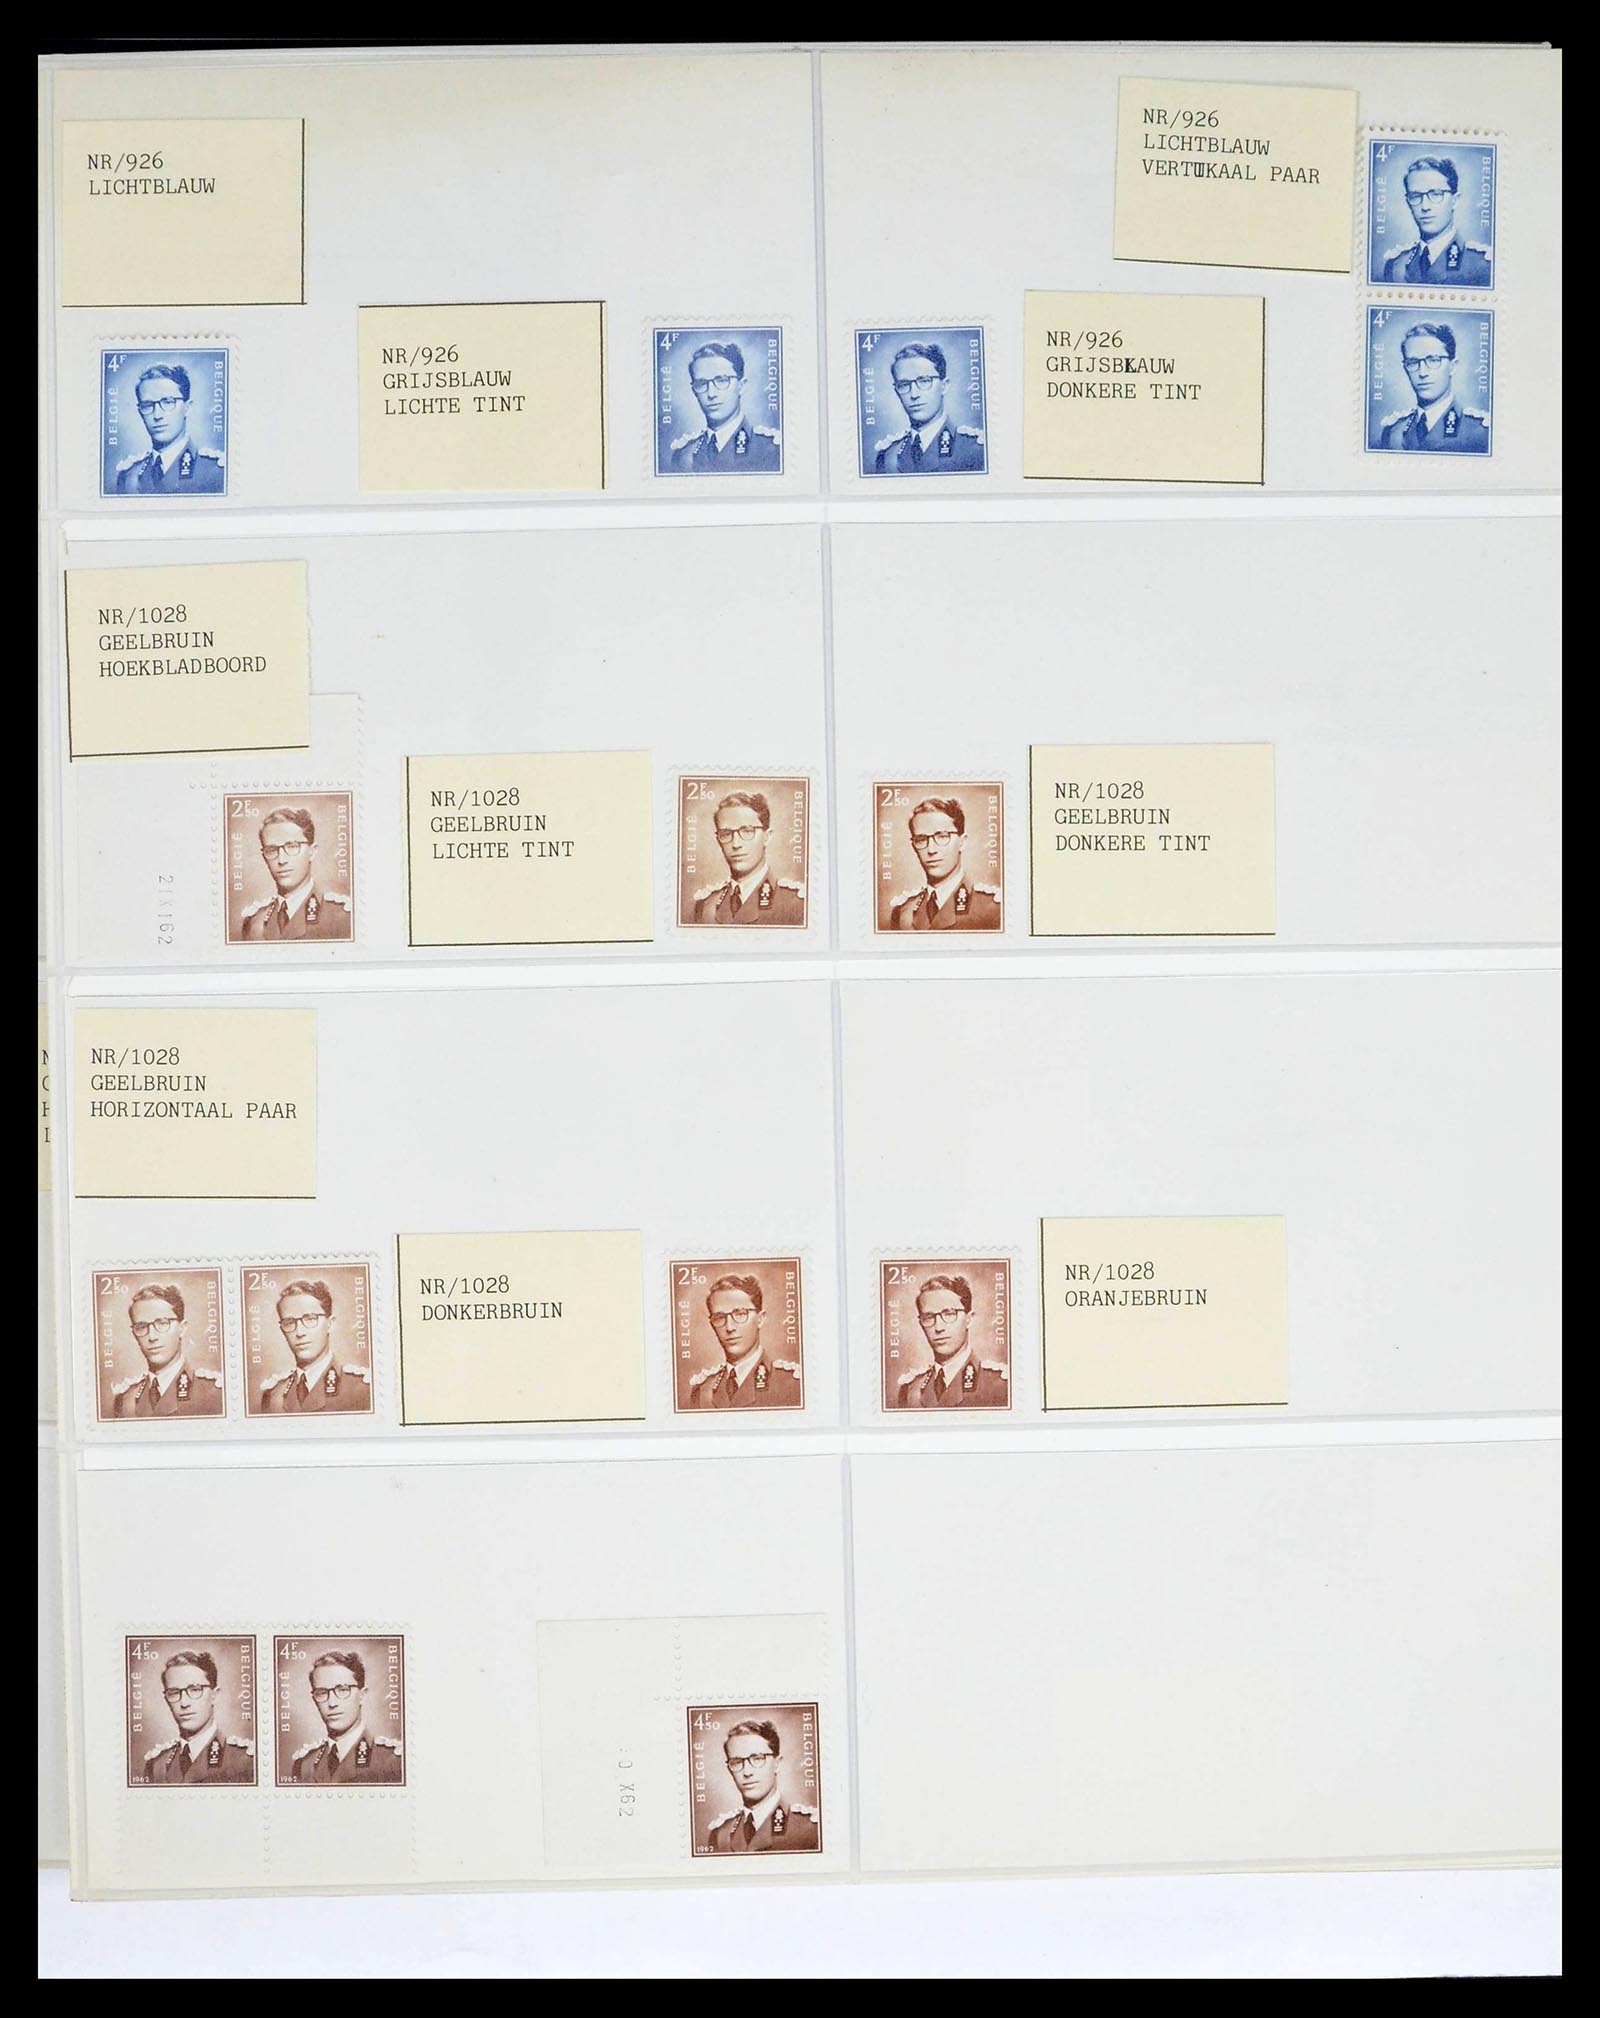 39229 0006 - Stamp collection 39229 Belgium Boudewijn with glasses 1952-1975.